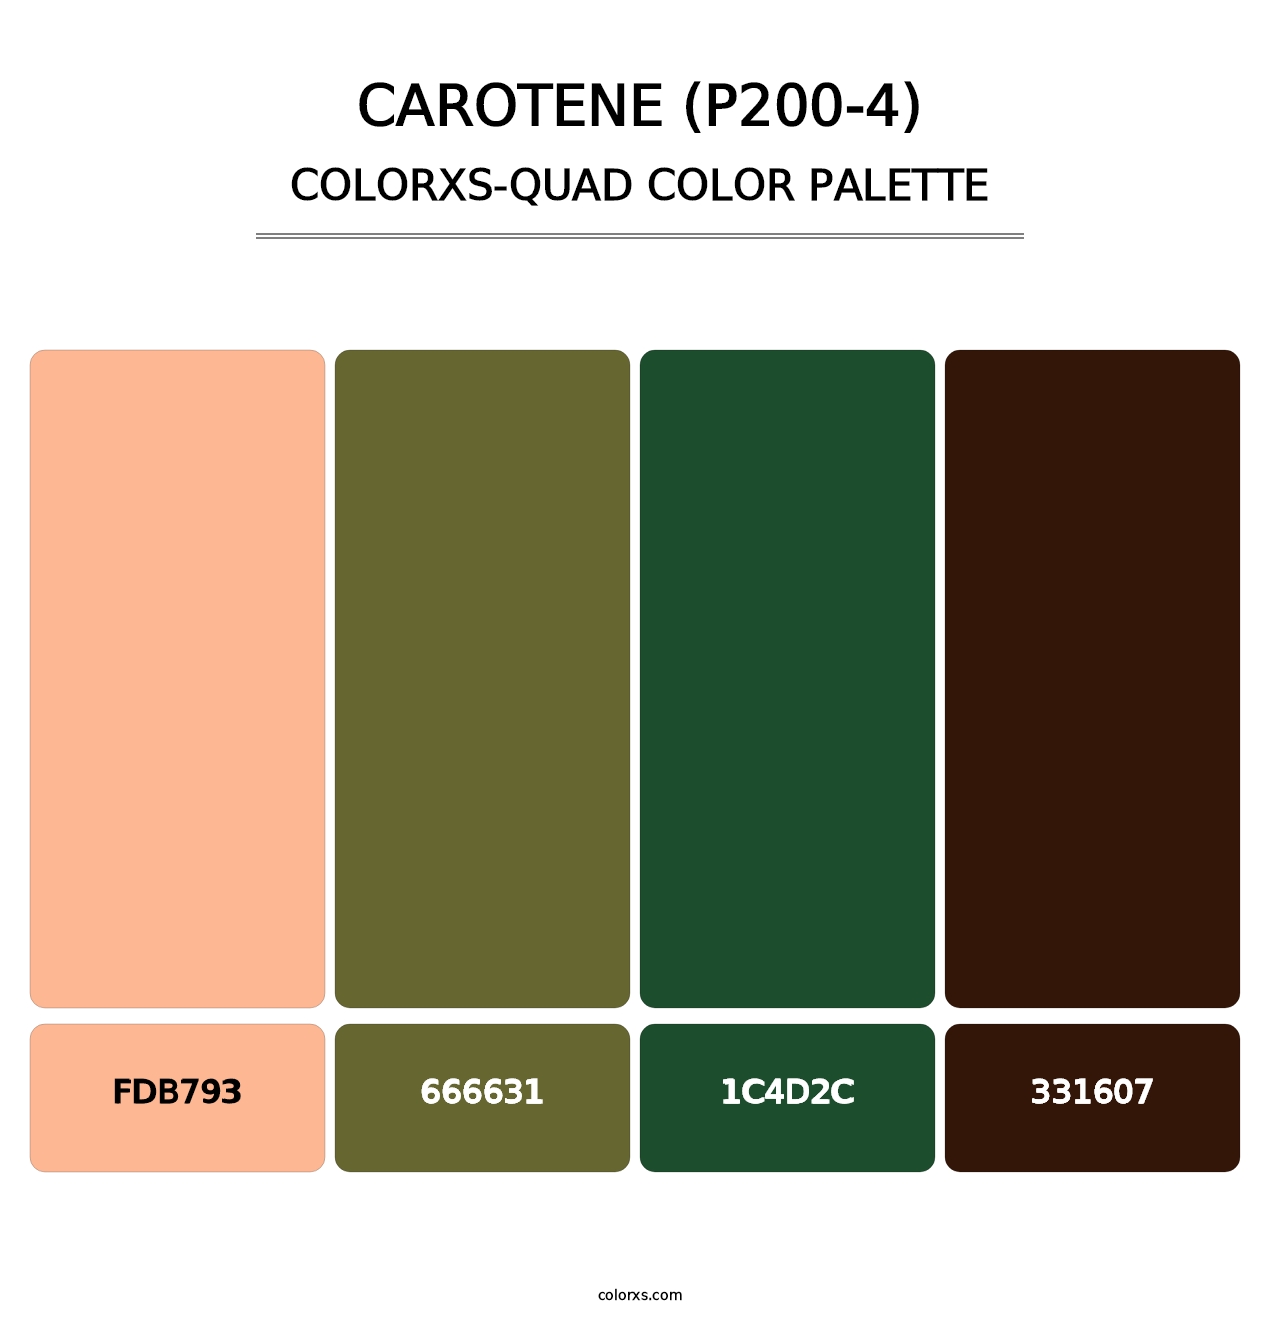 Carotene (P200-4) - Colorxs Quad Palette